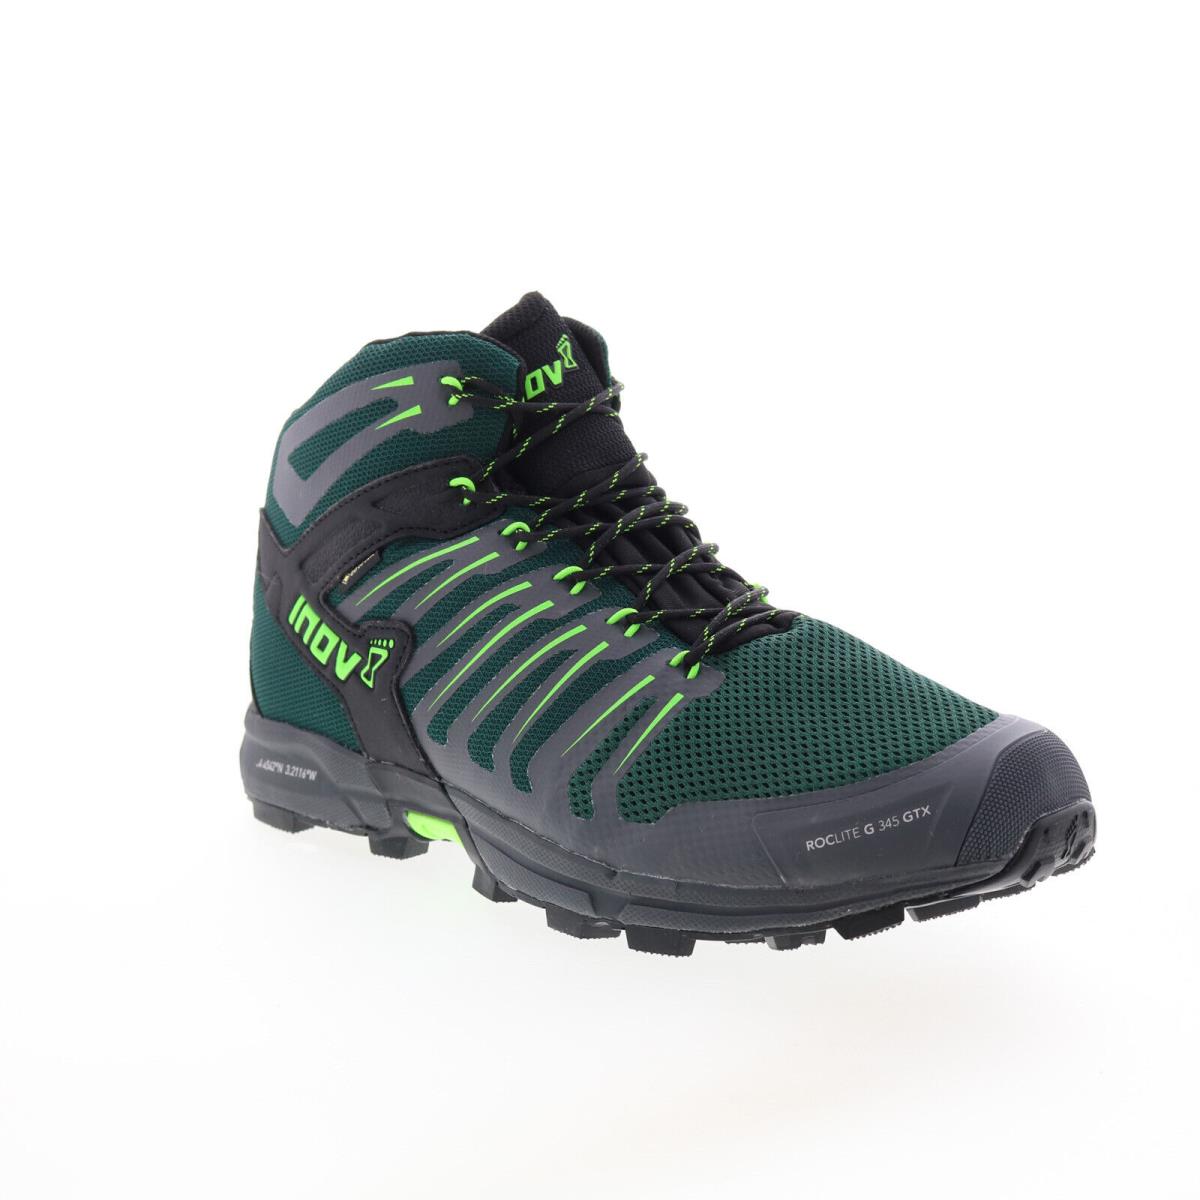 Inov-8 Roclite G 345 Gtx 000802-GAGR Mens Green Synthetic Hiking Boots